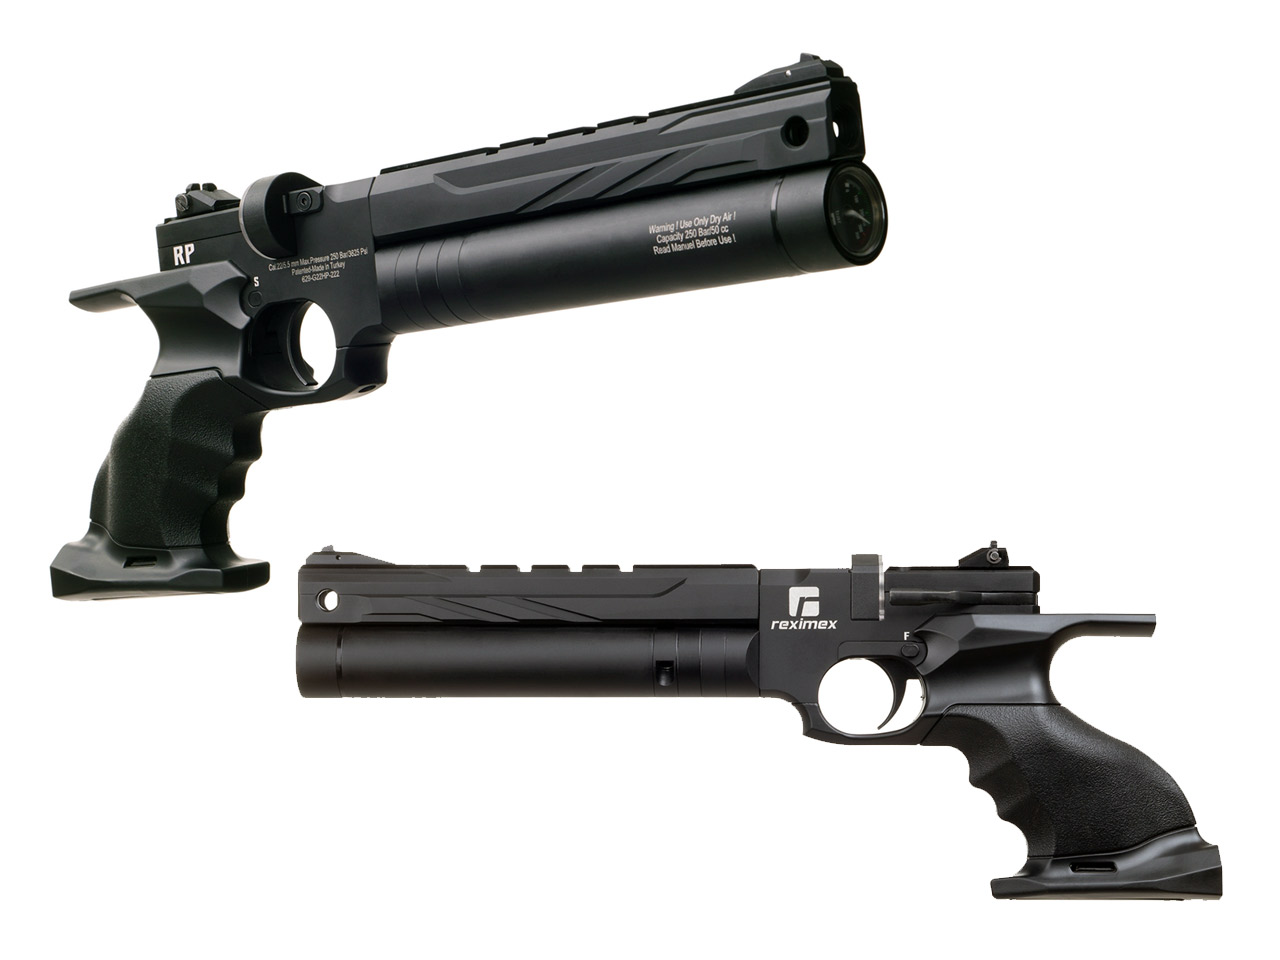 Pressluftpistole Reximex RP Kunststoff Griff Hinterschaft Regulator Kaliber 4,5 mm (P18)